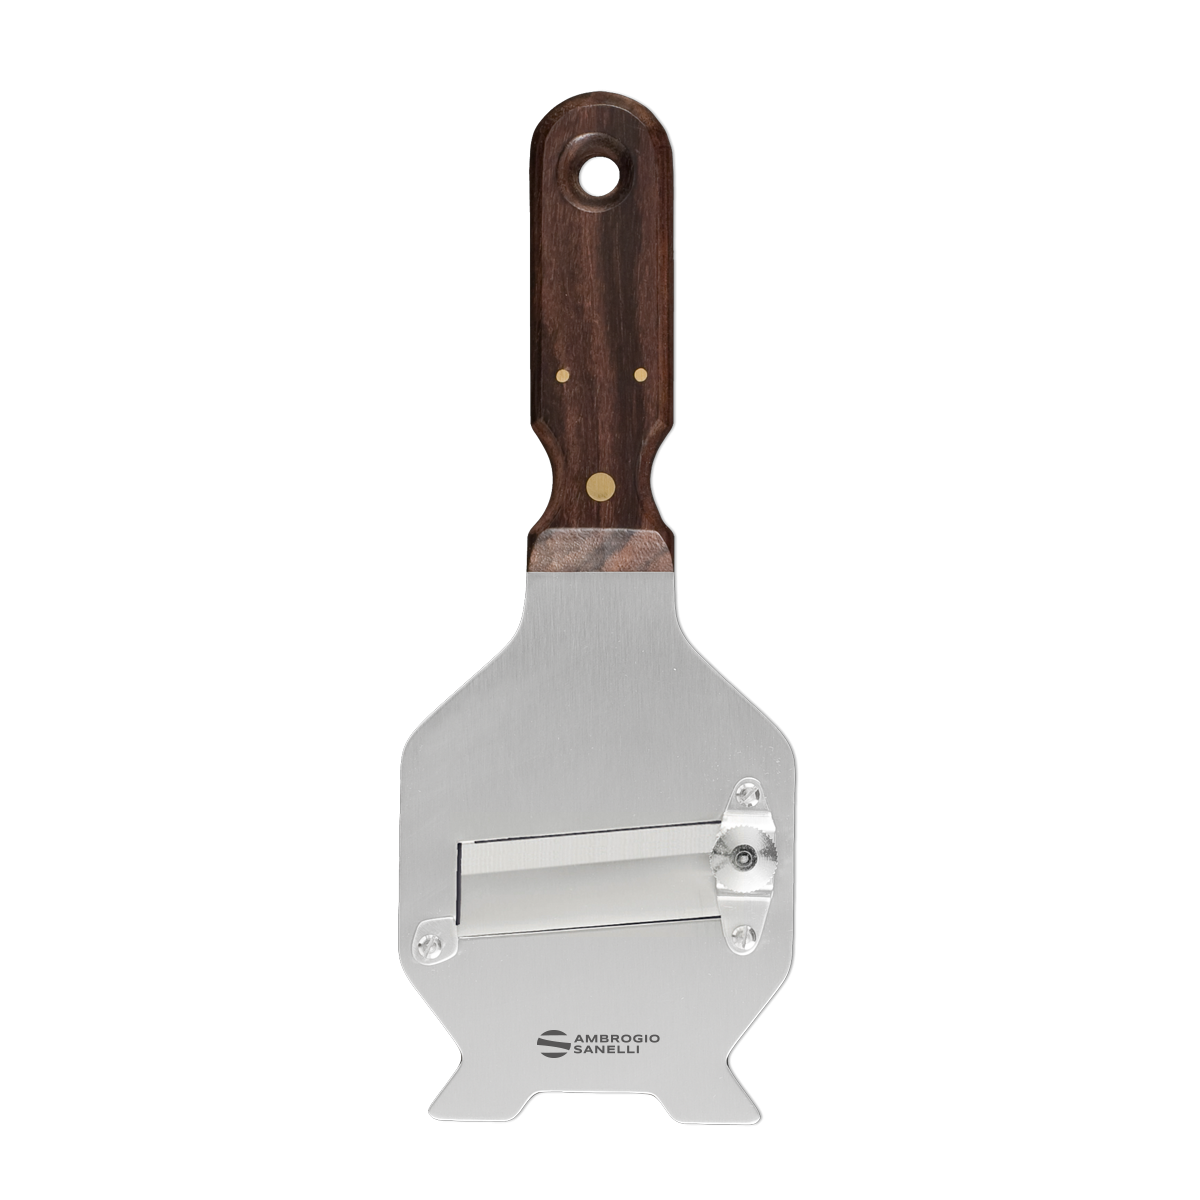 Sanelli Ambrogio Stainless Rosewood Truffle Slicer Plain Blade-kitchen tools-Sanelli Ambrogio-Carbon Knife Co